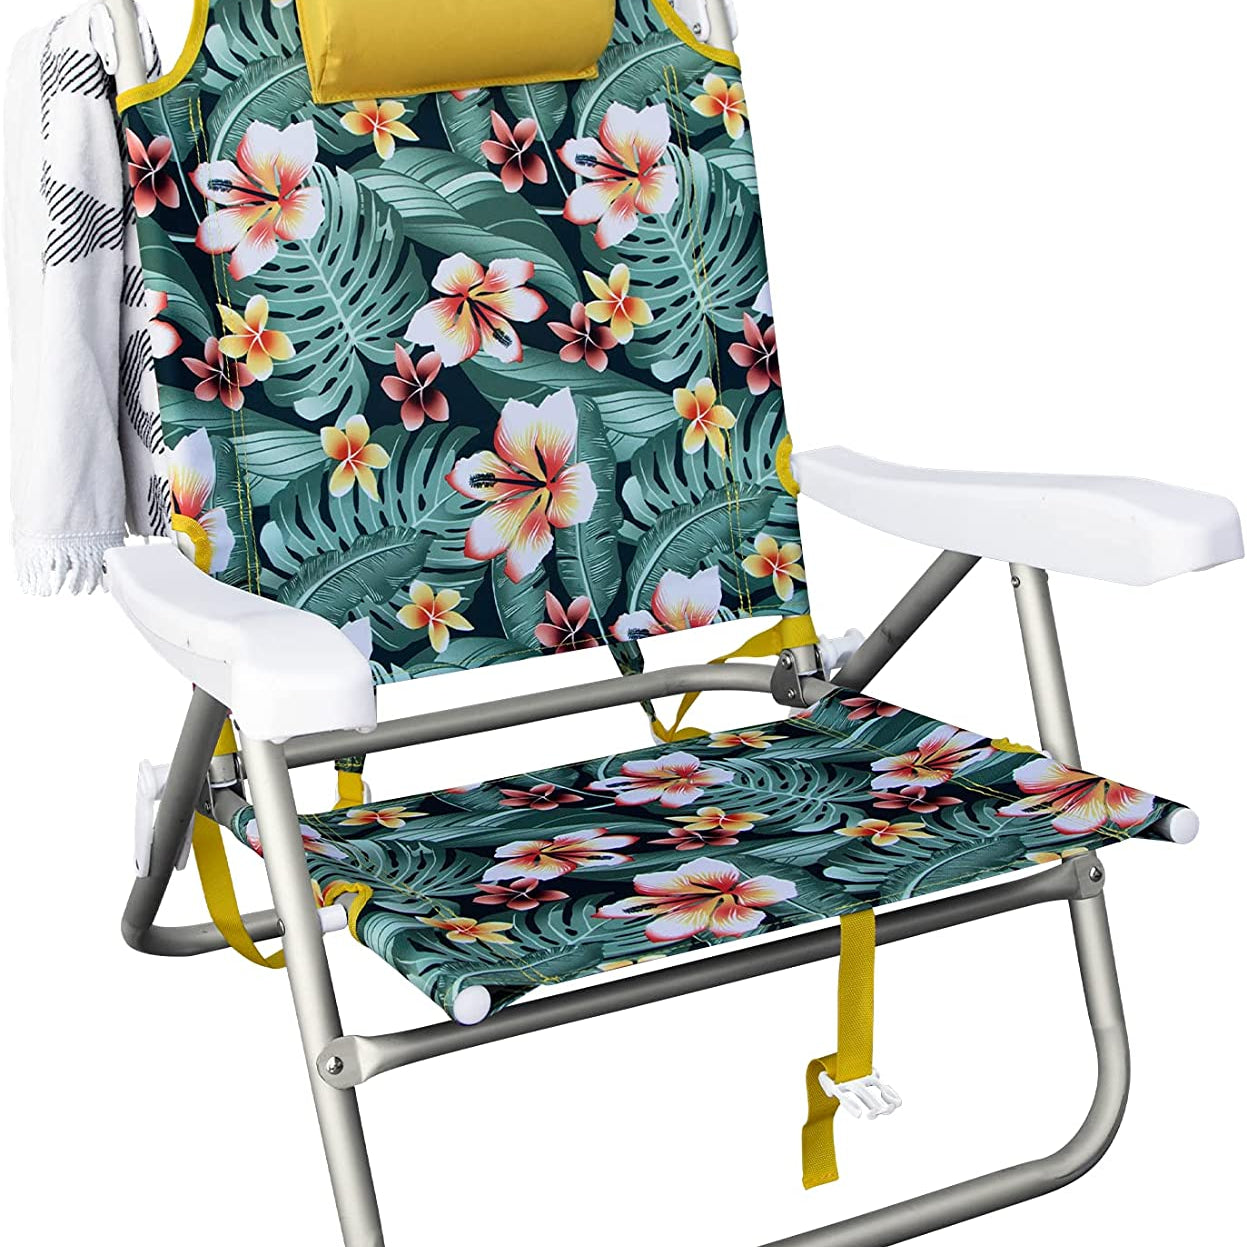 Hurley Backpack Beach Chair CabanaGray